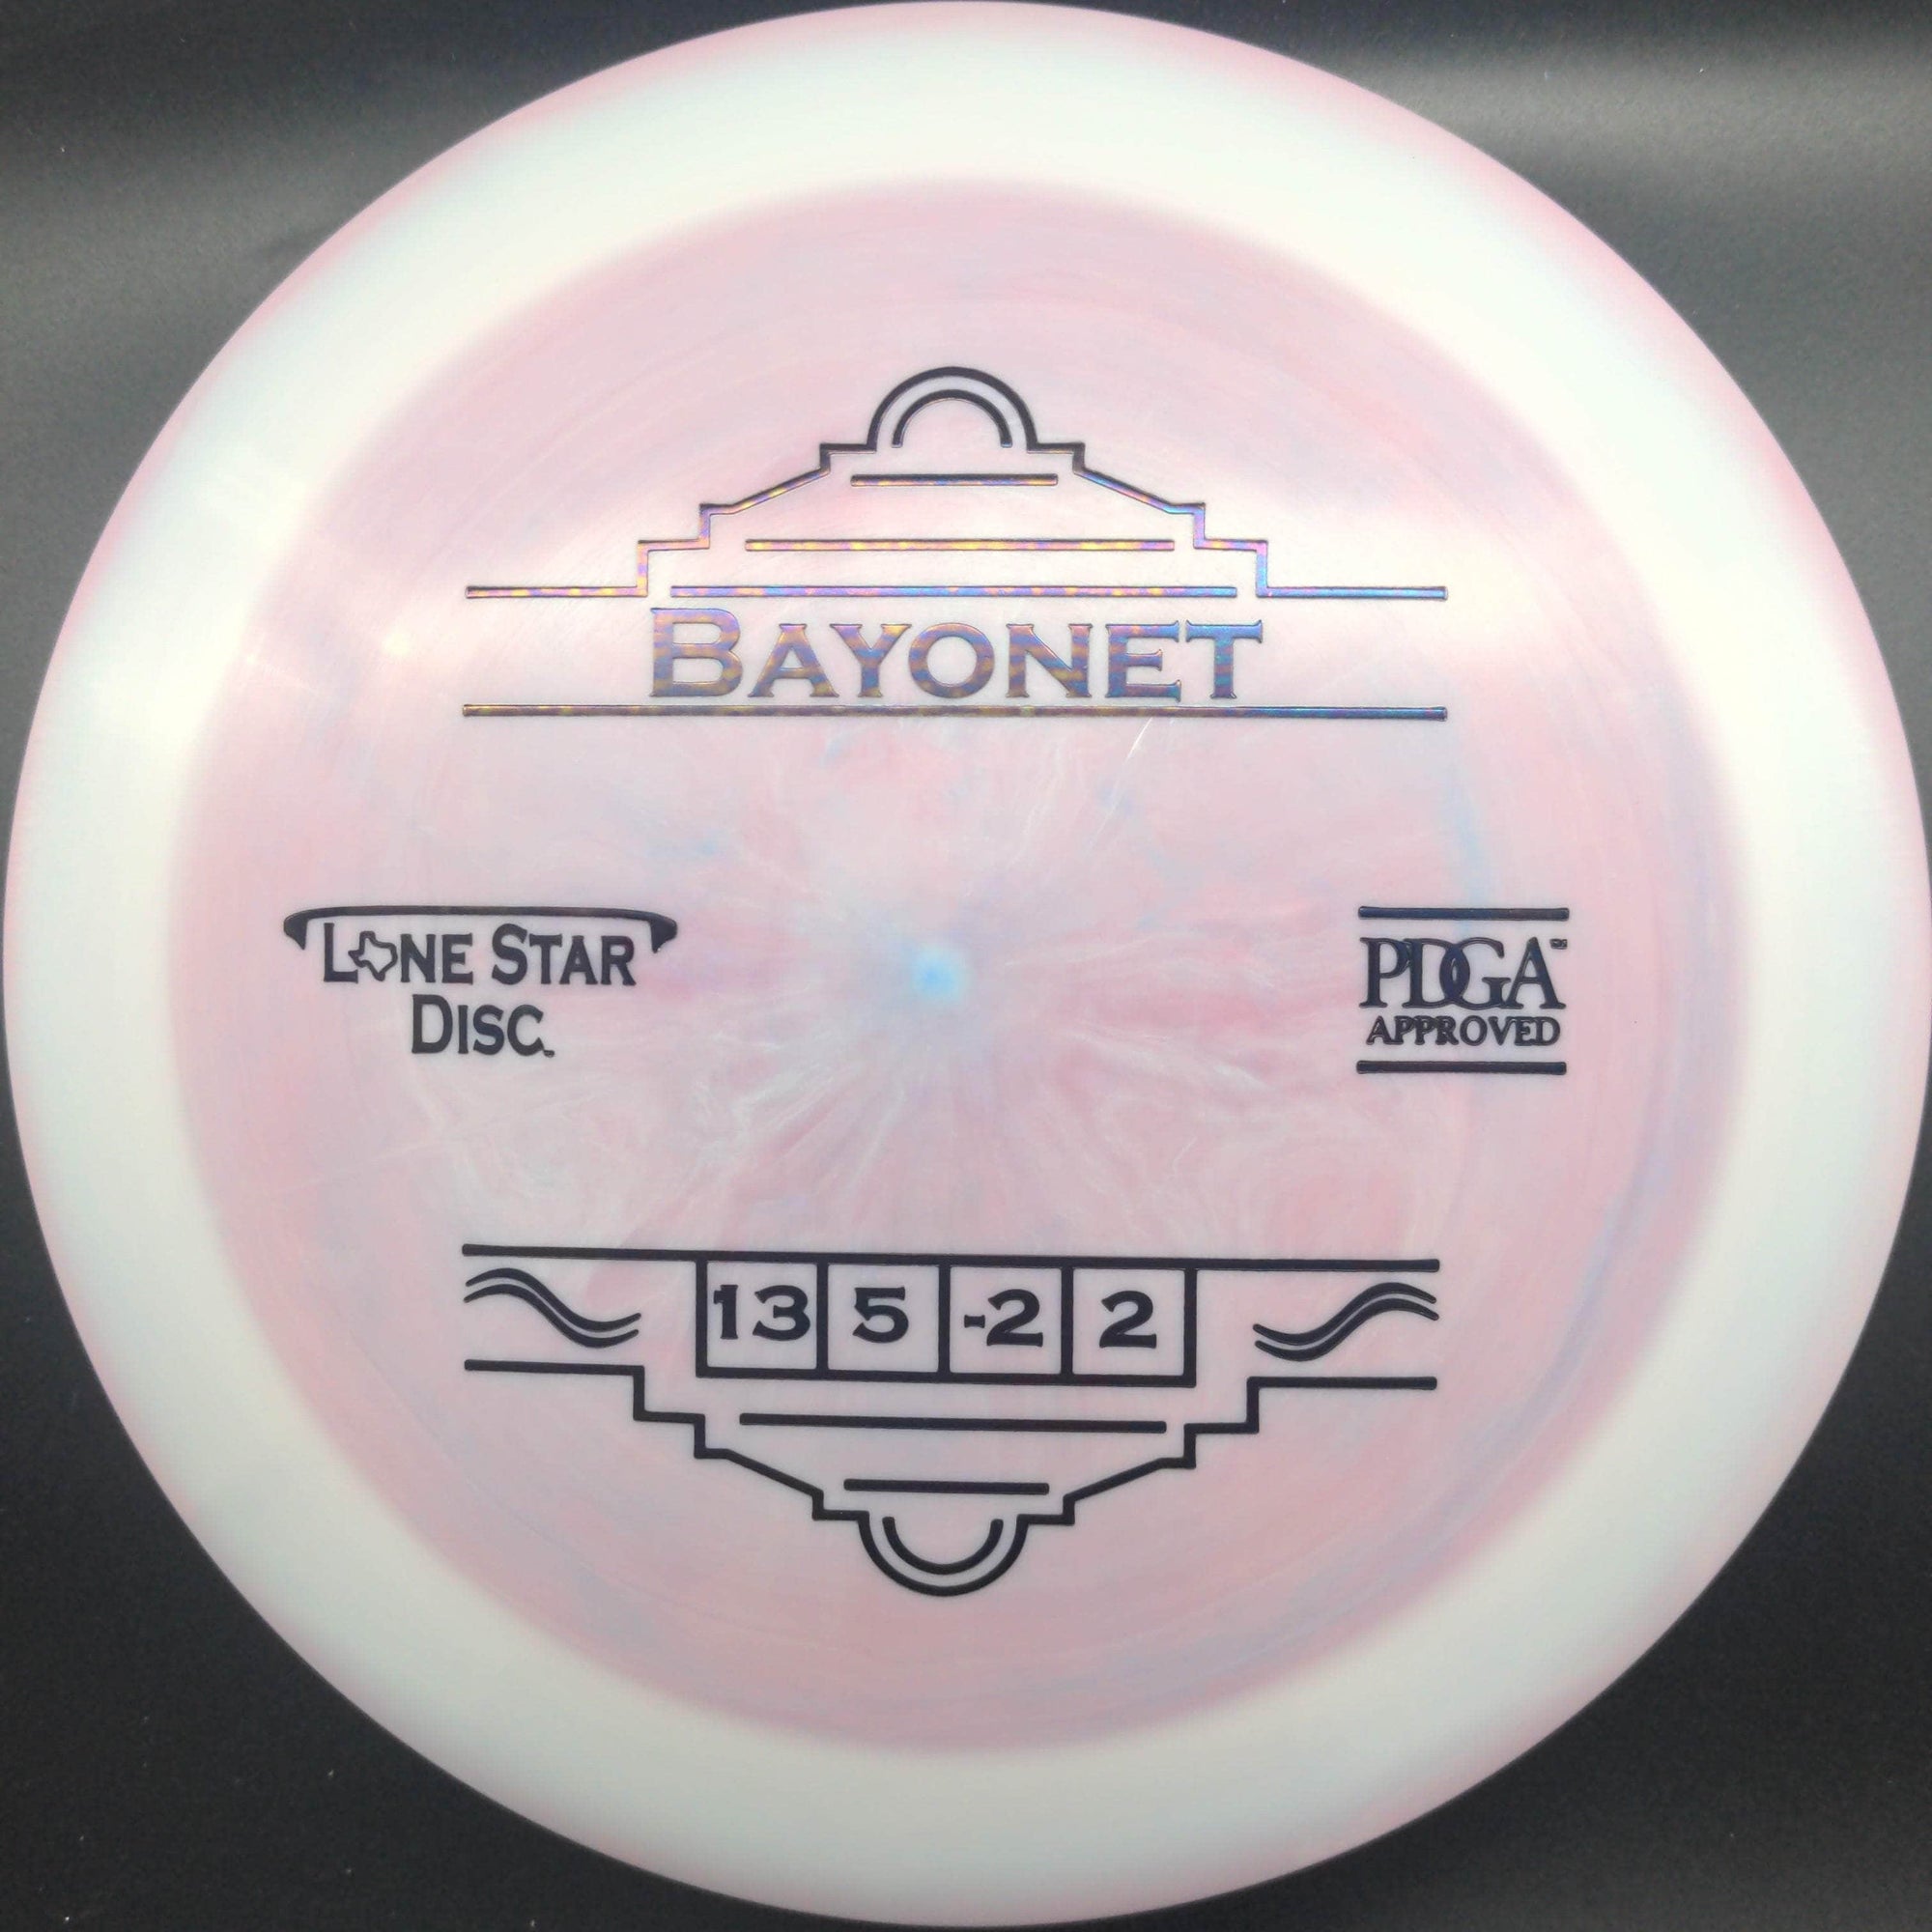 Lone Star Discs Distance Driver Bayonet, Bravo Plastic